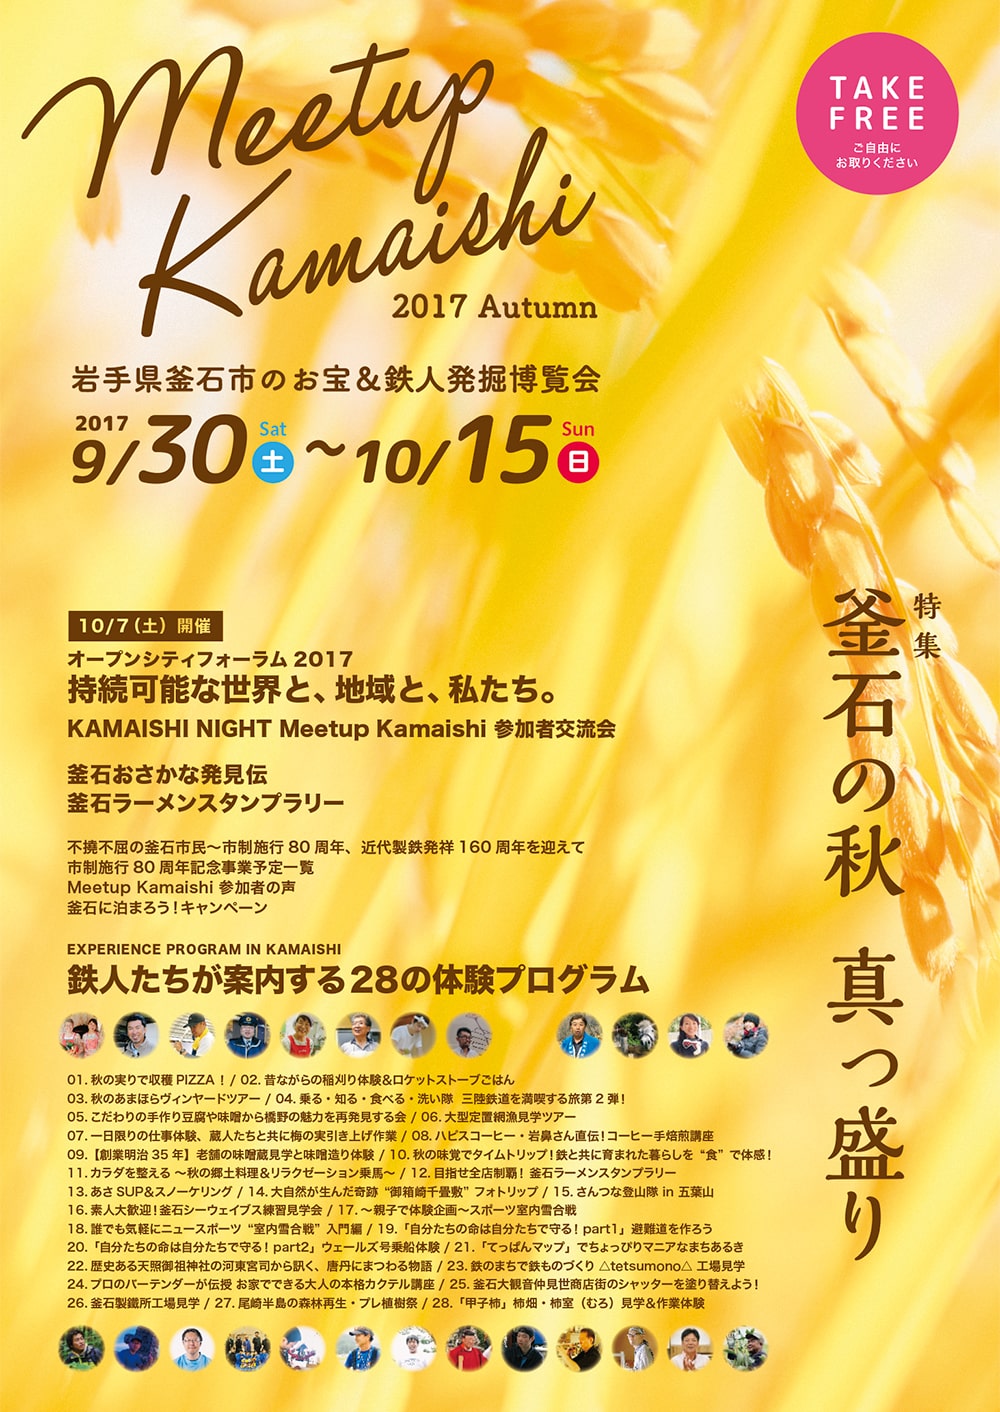 Meetup Kamaishi2017 Autumn